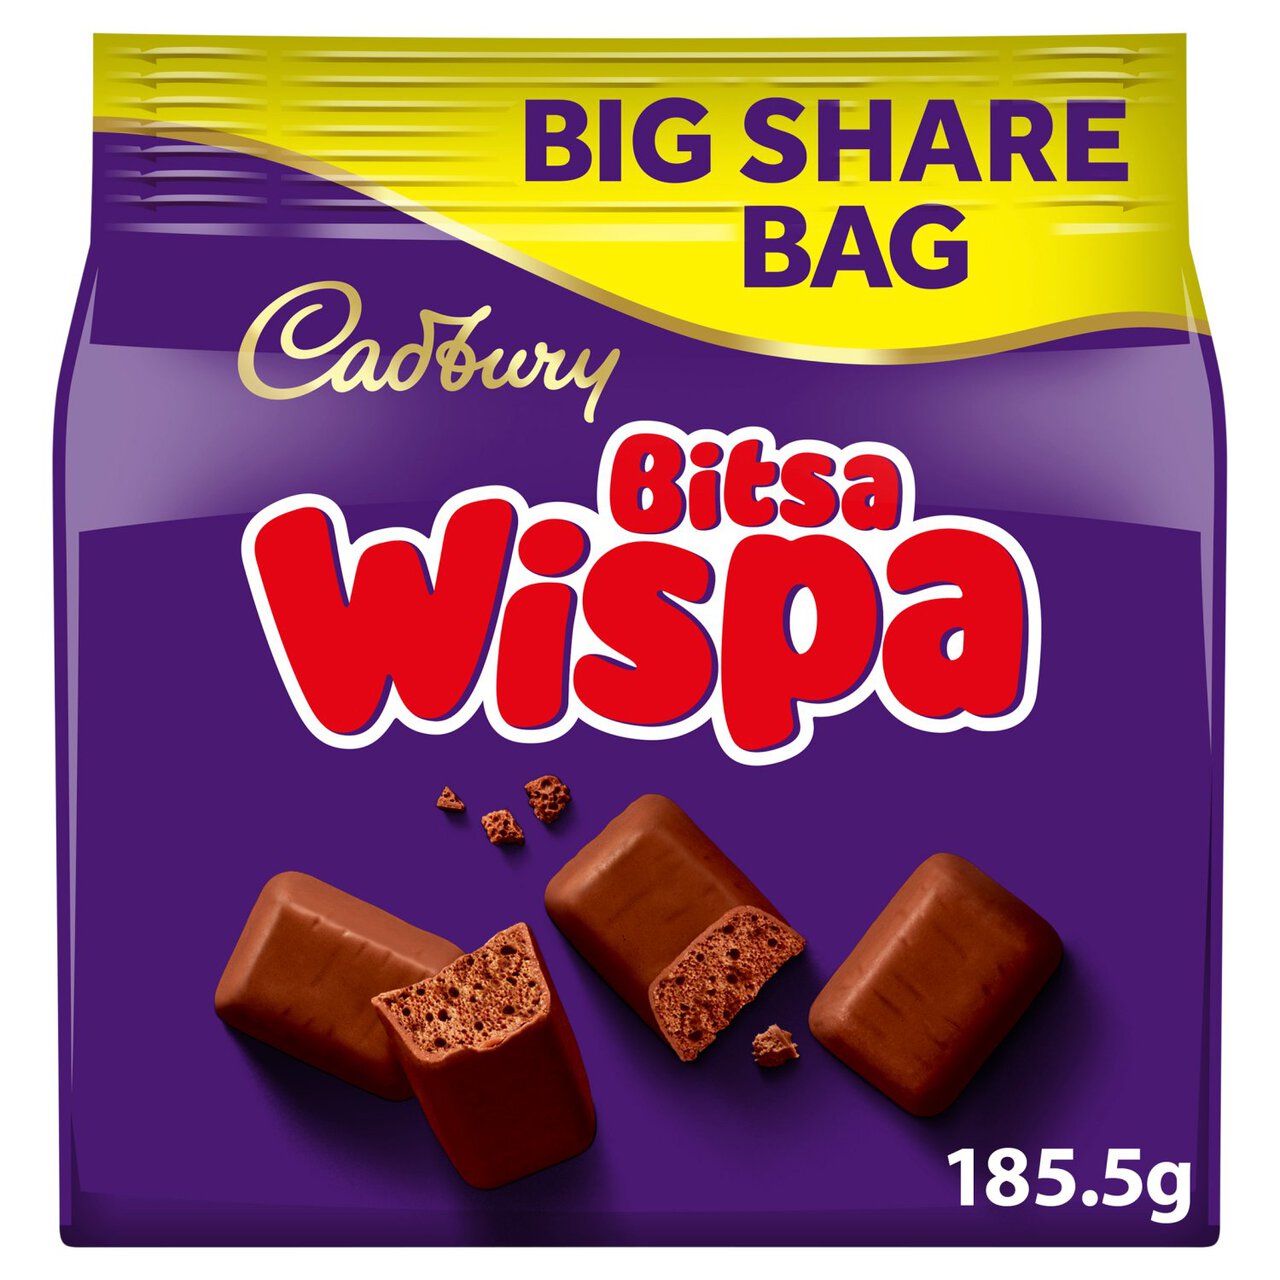 Cadbury Bitsa Wispa Chocolate Big Share Bag 185.5g